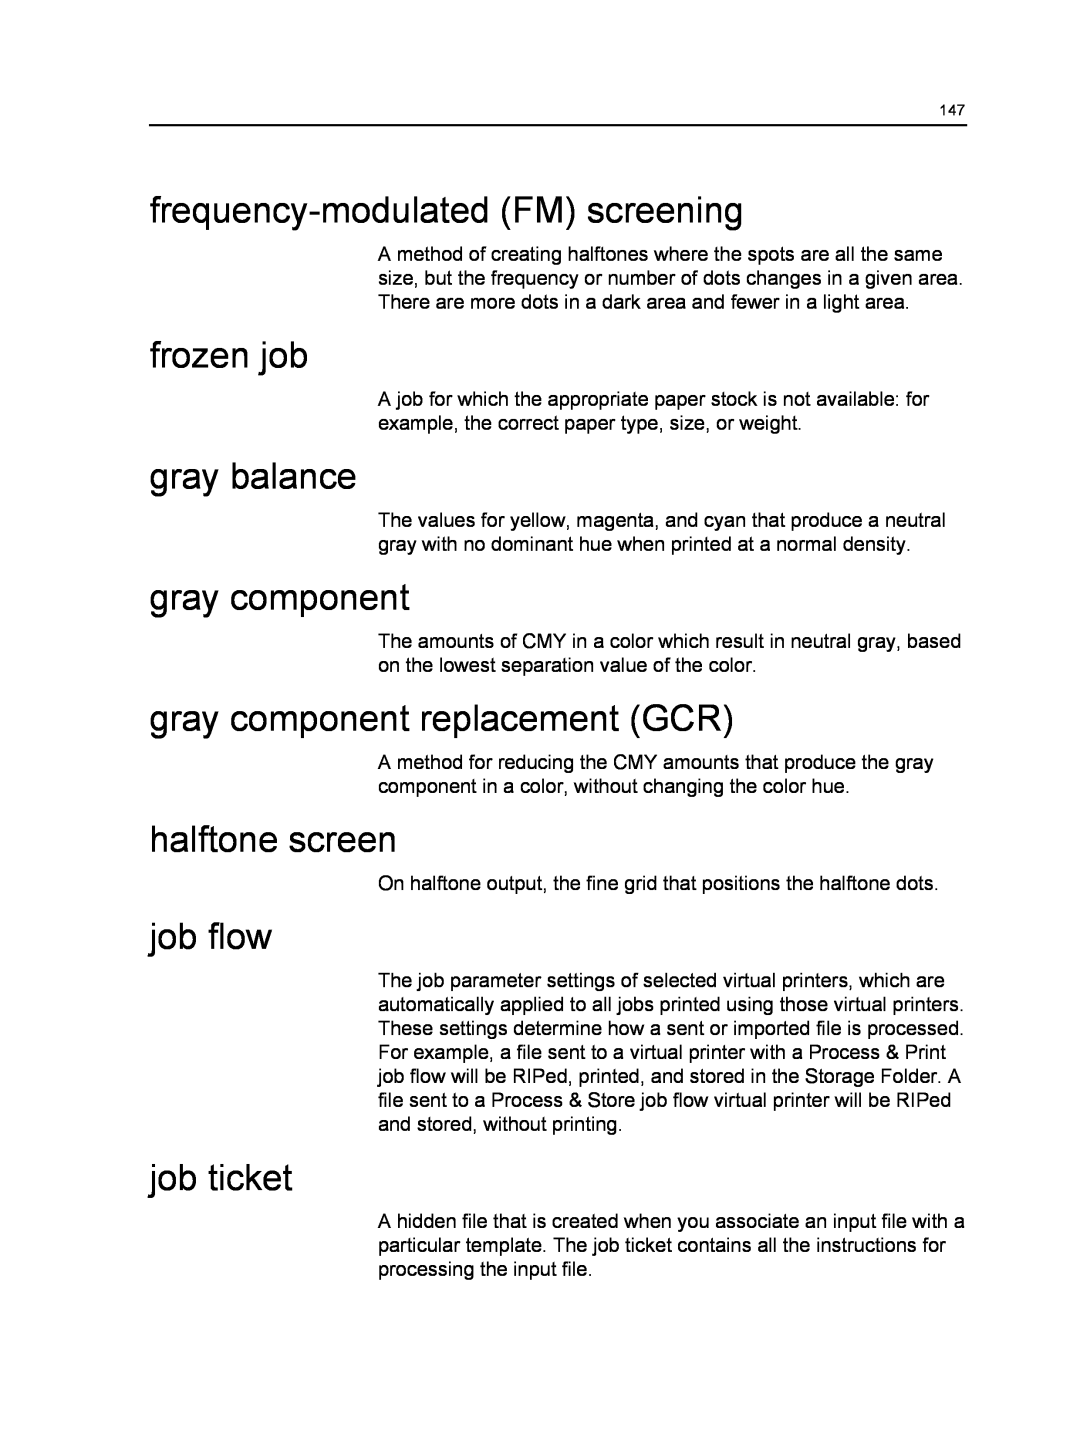 Xerox 550 frequency-modulatedFM screening, frozen job, gray balance, gray component replacement GCR, halftone screen 